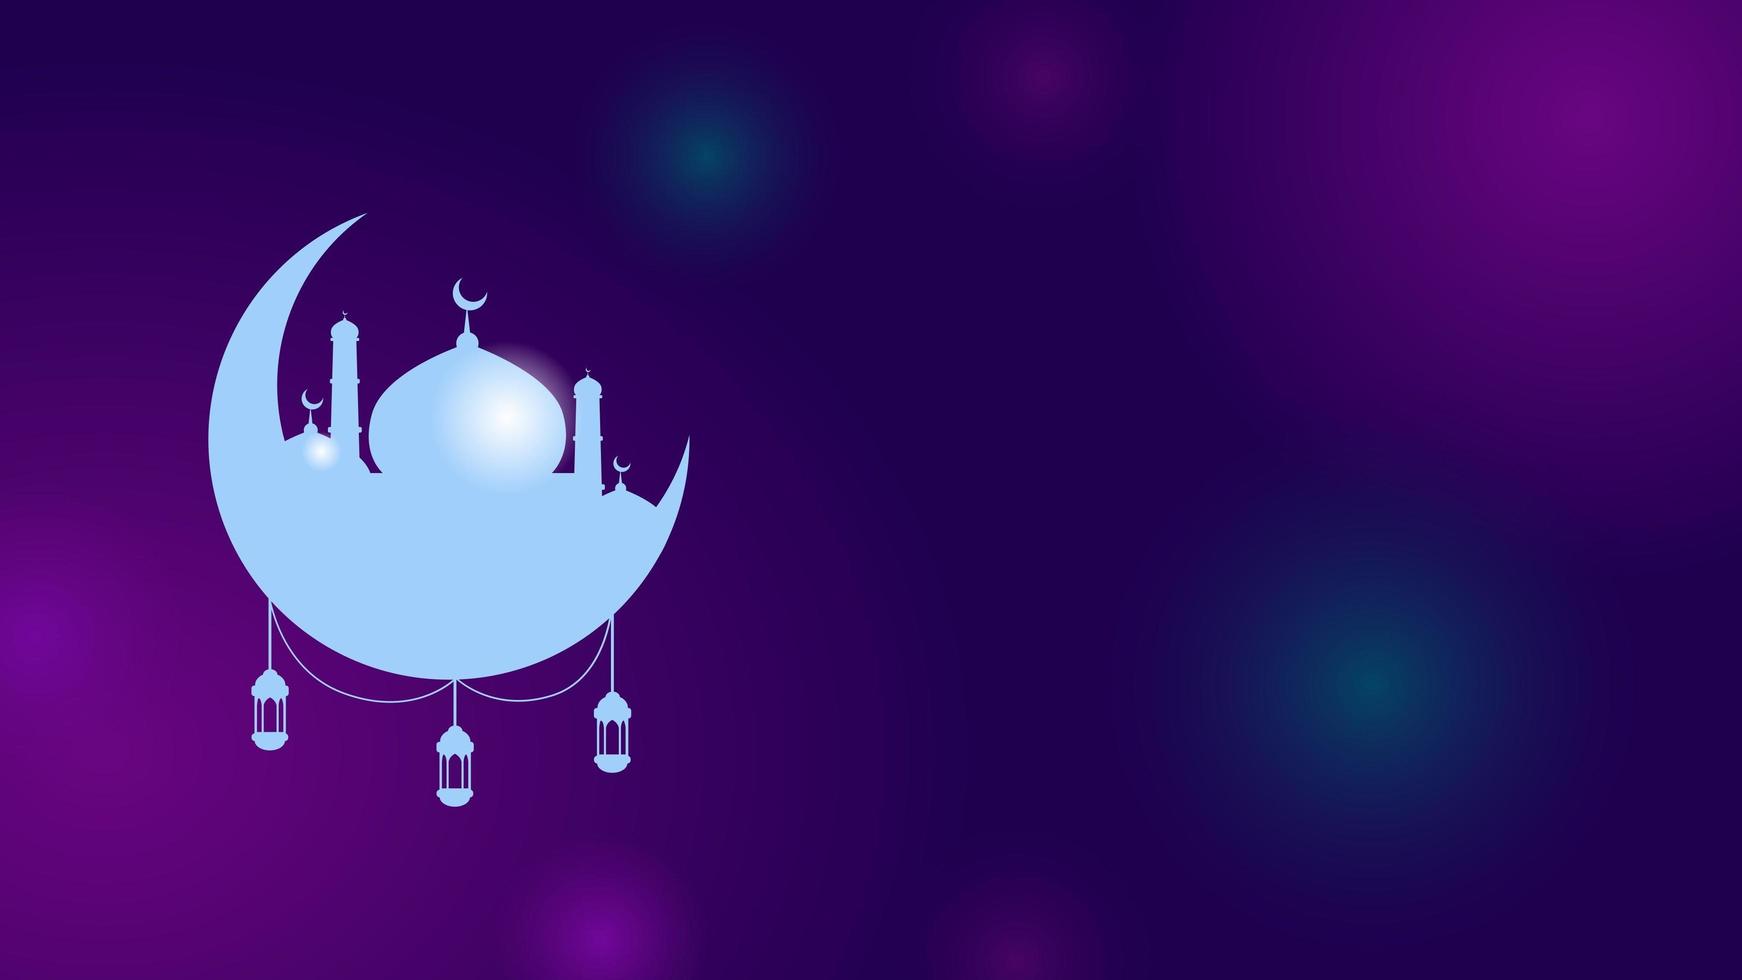 Islamic background with mosque and moon, ramadan, eid,  birthday of the prophet Muhammad. Rasterized photo